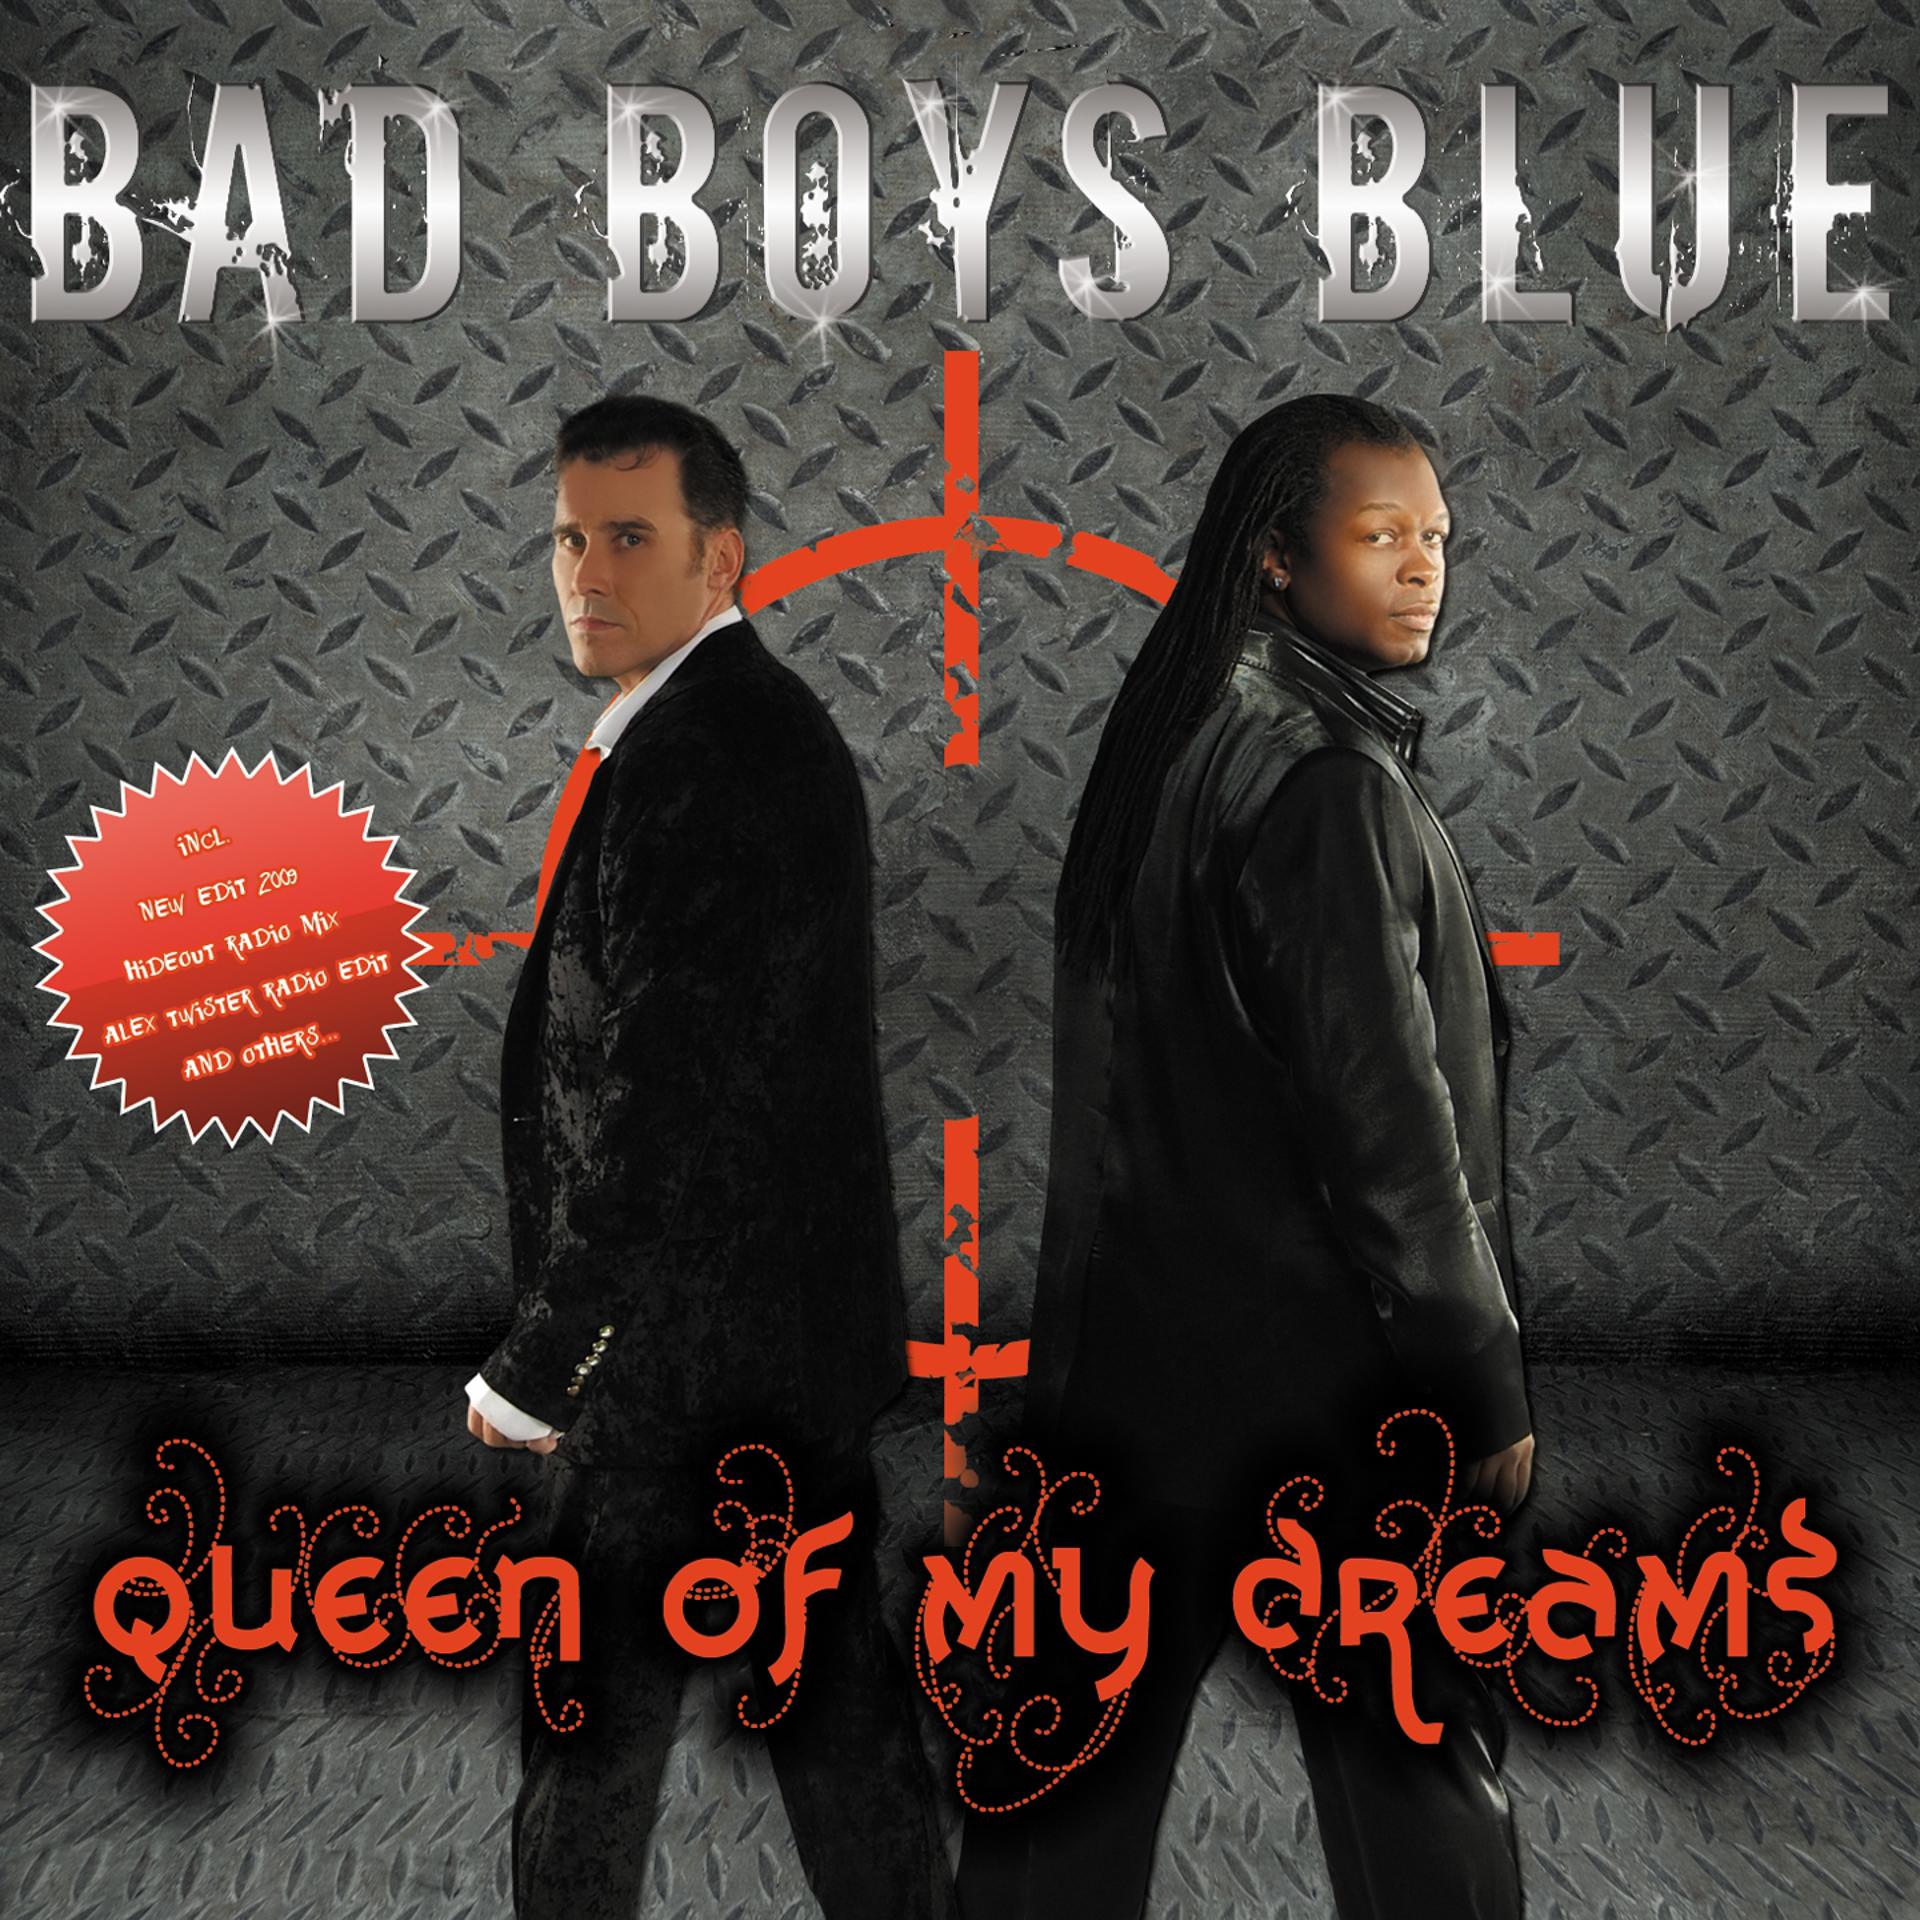 Bad boys new. Группа Bad boys Blue. Bad boys Blue сингл. Фото группы бэд бойс Блю. Bad boys Blue super 20.